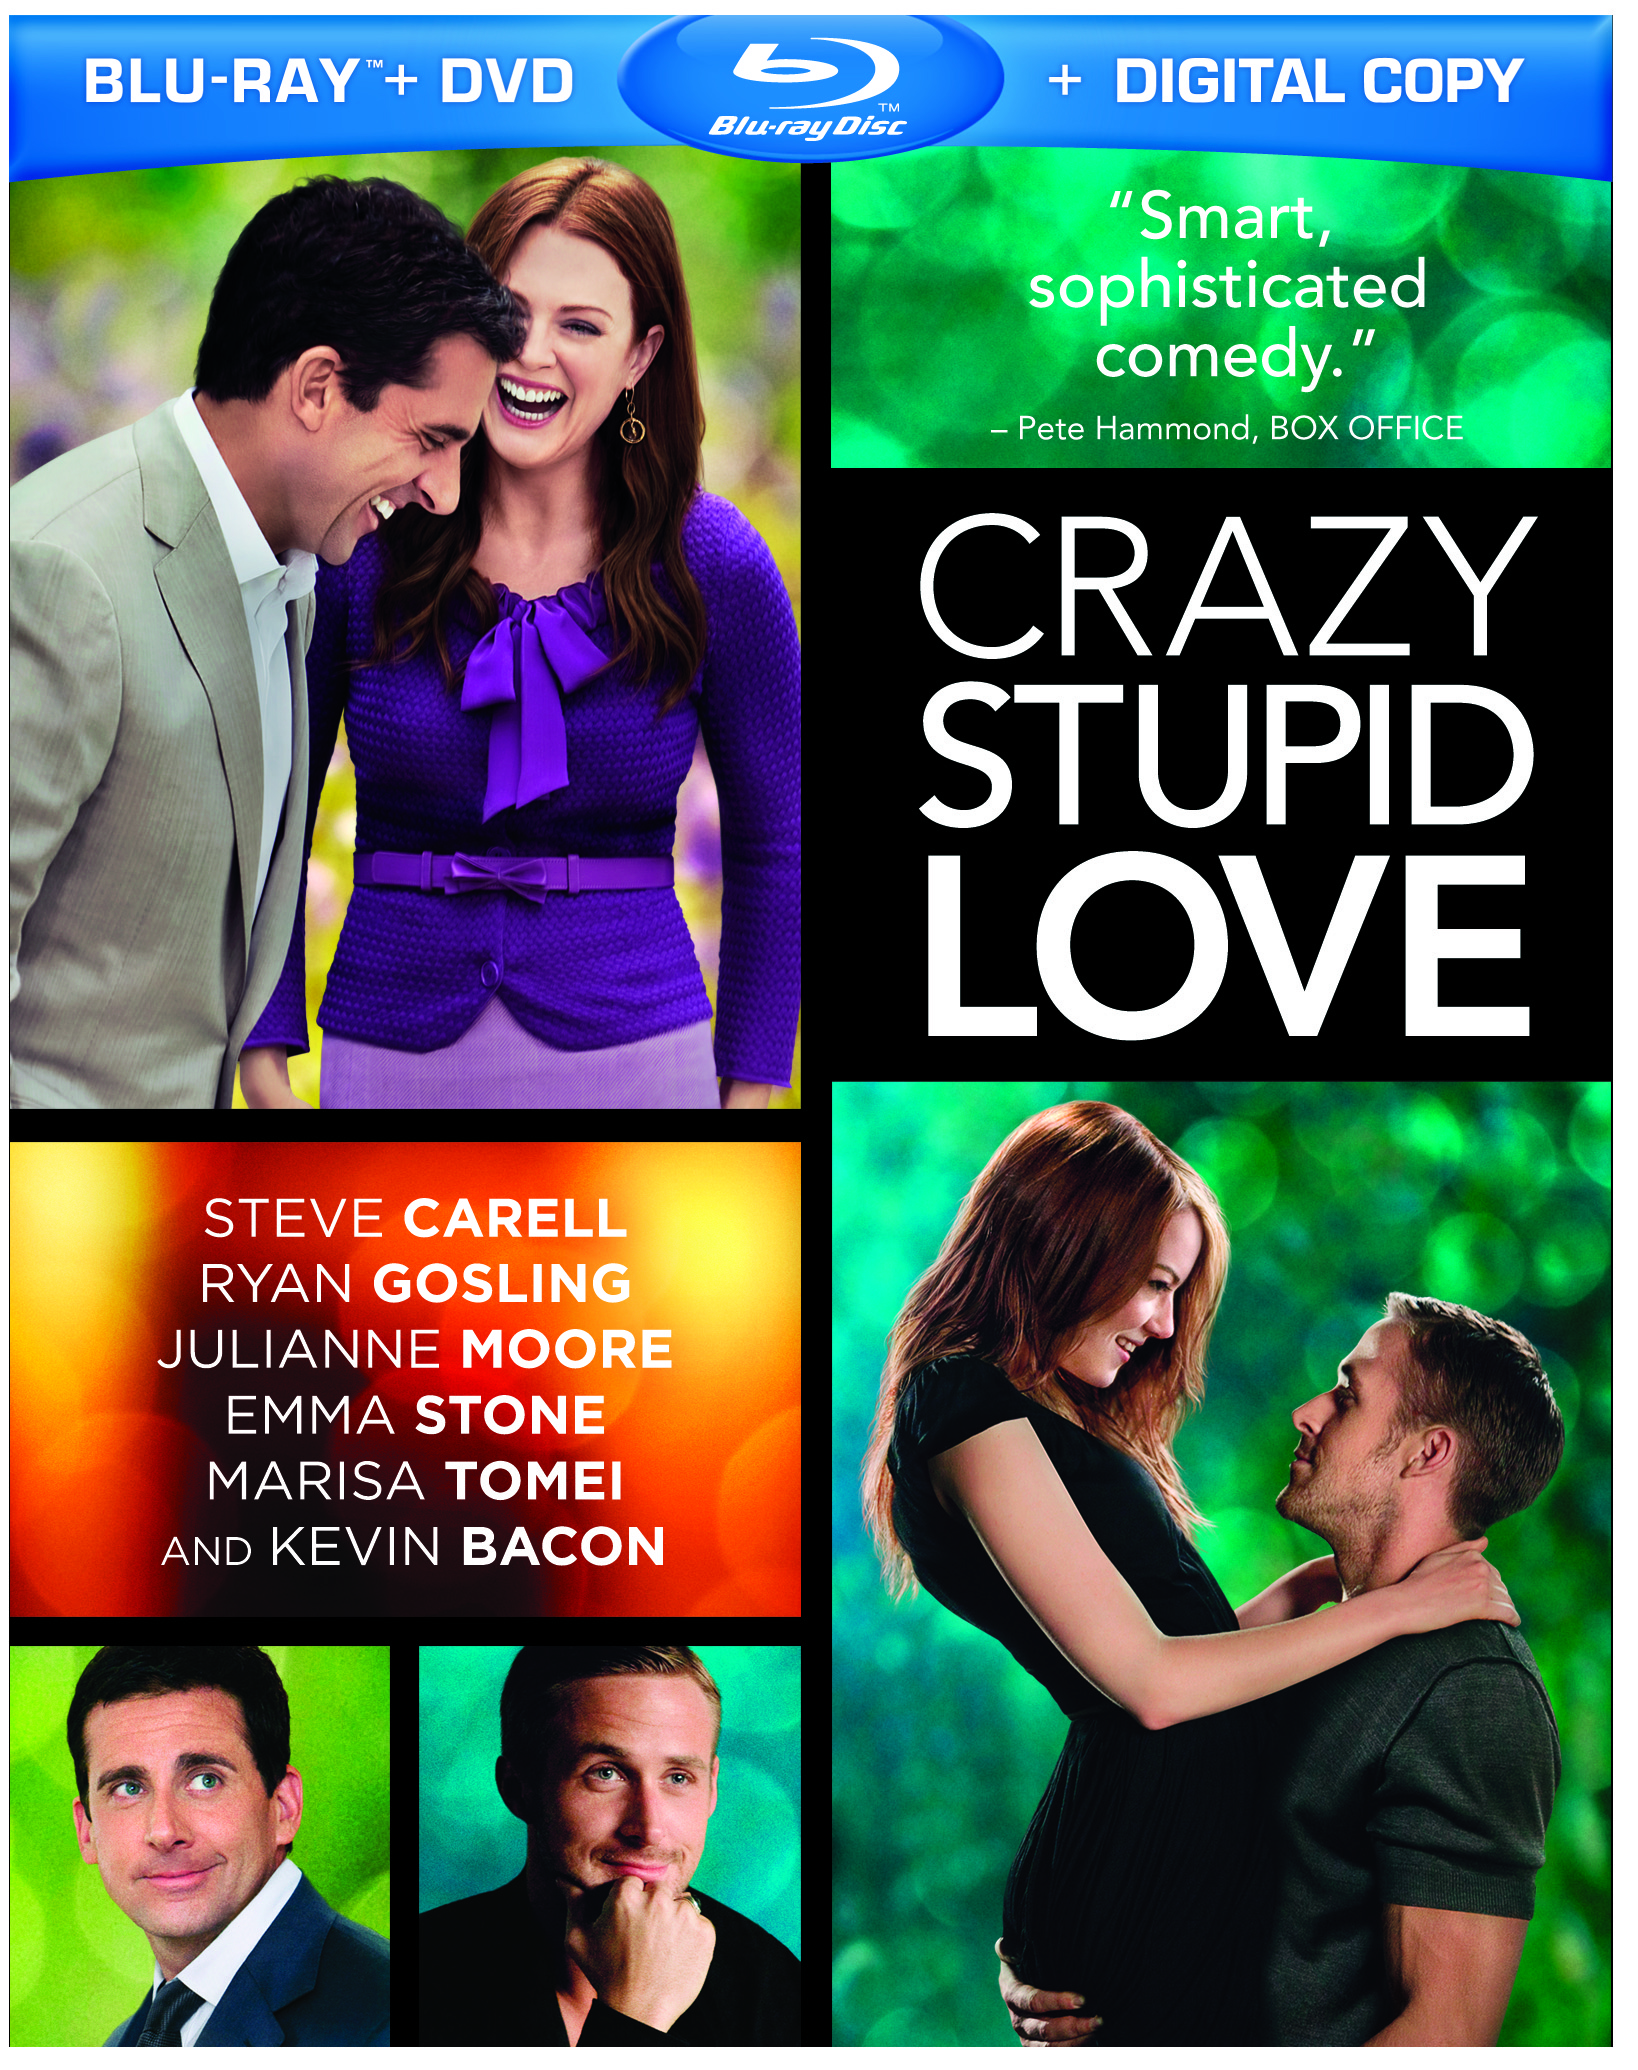 Crazy Stupid Love Blu-ray Box Art